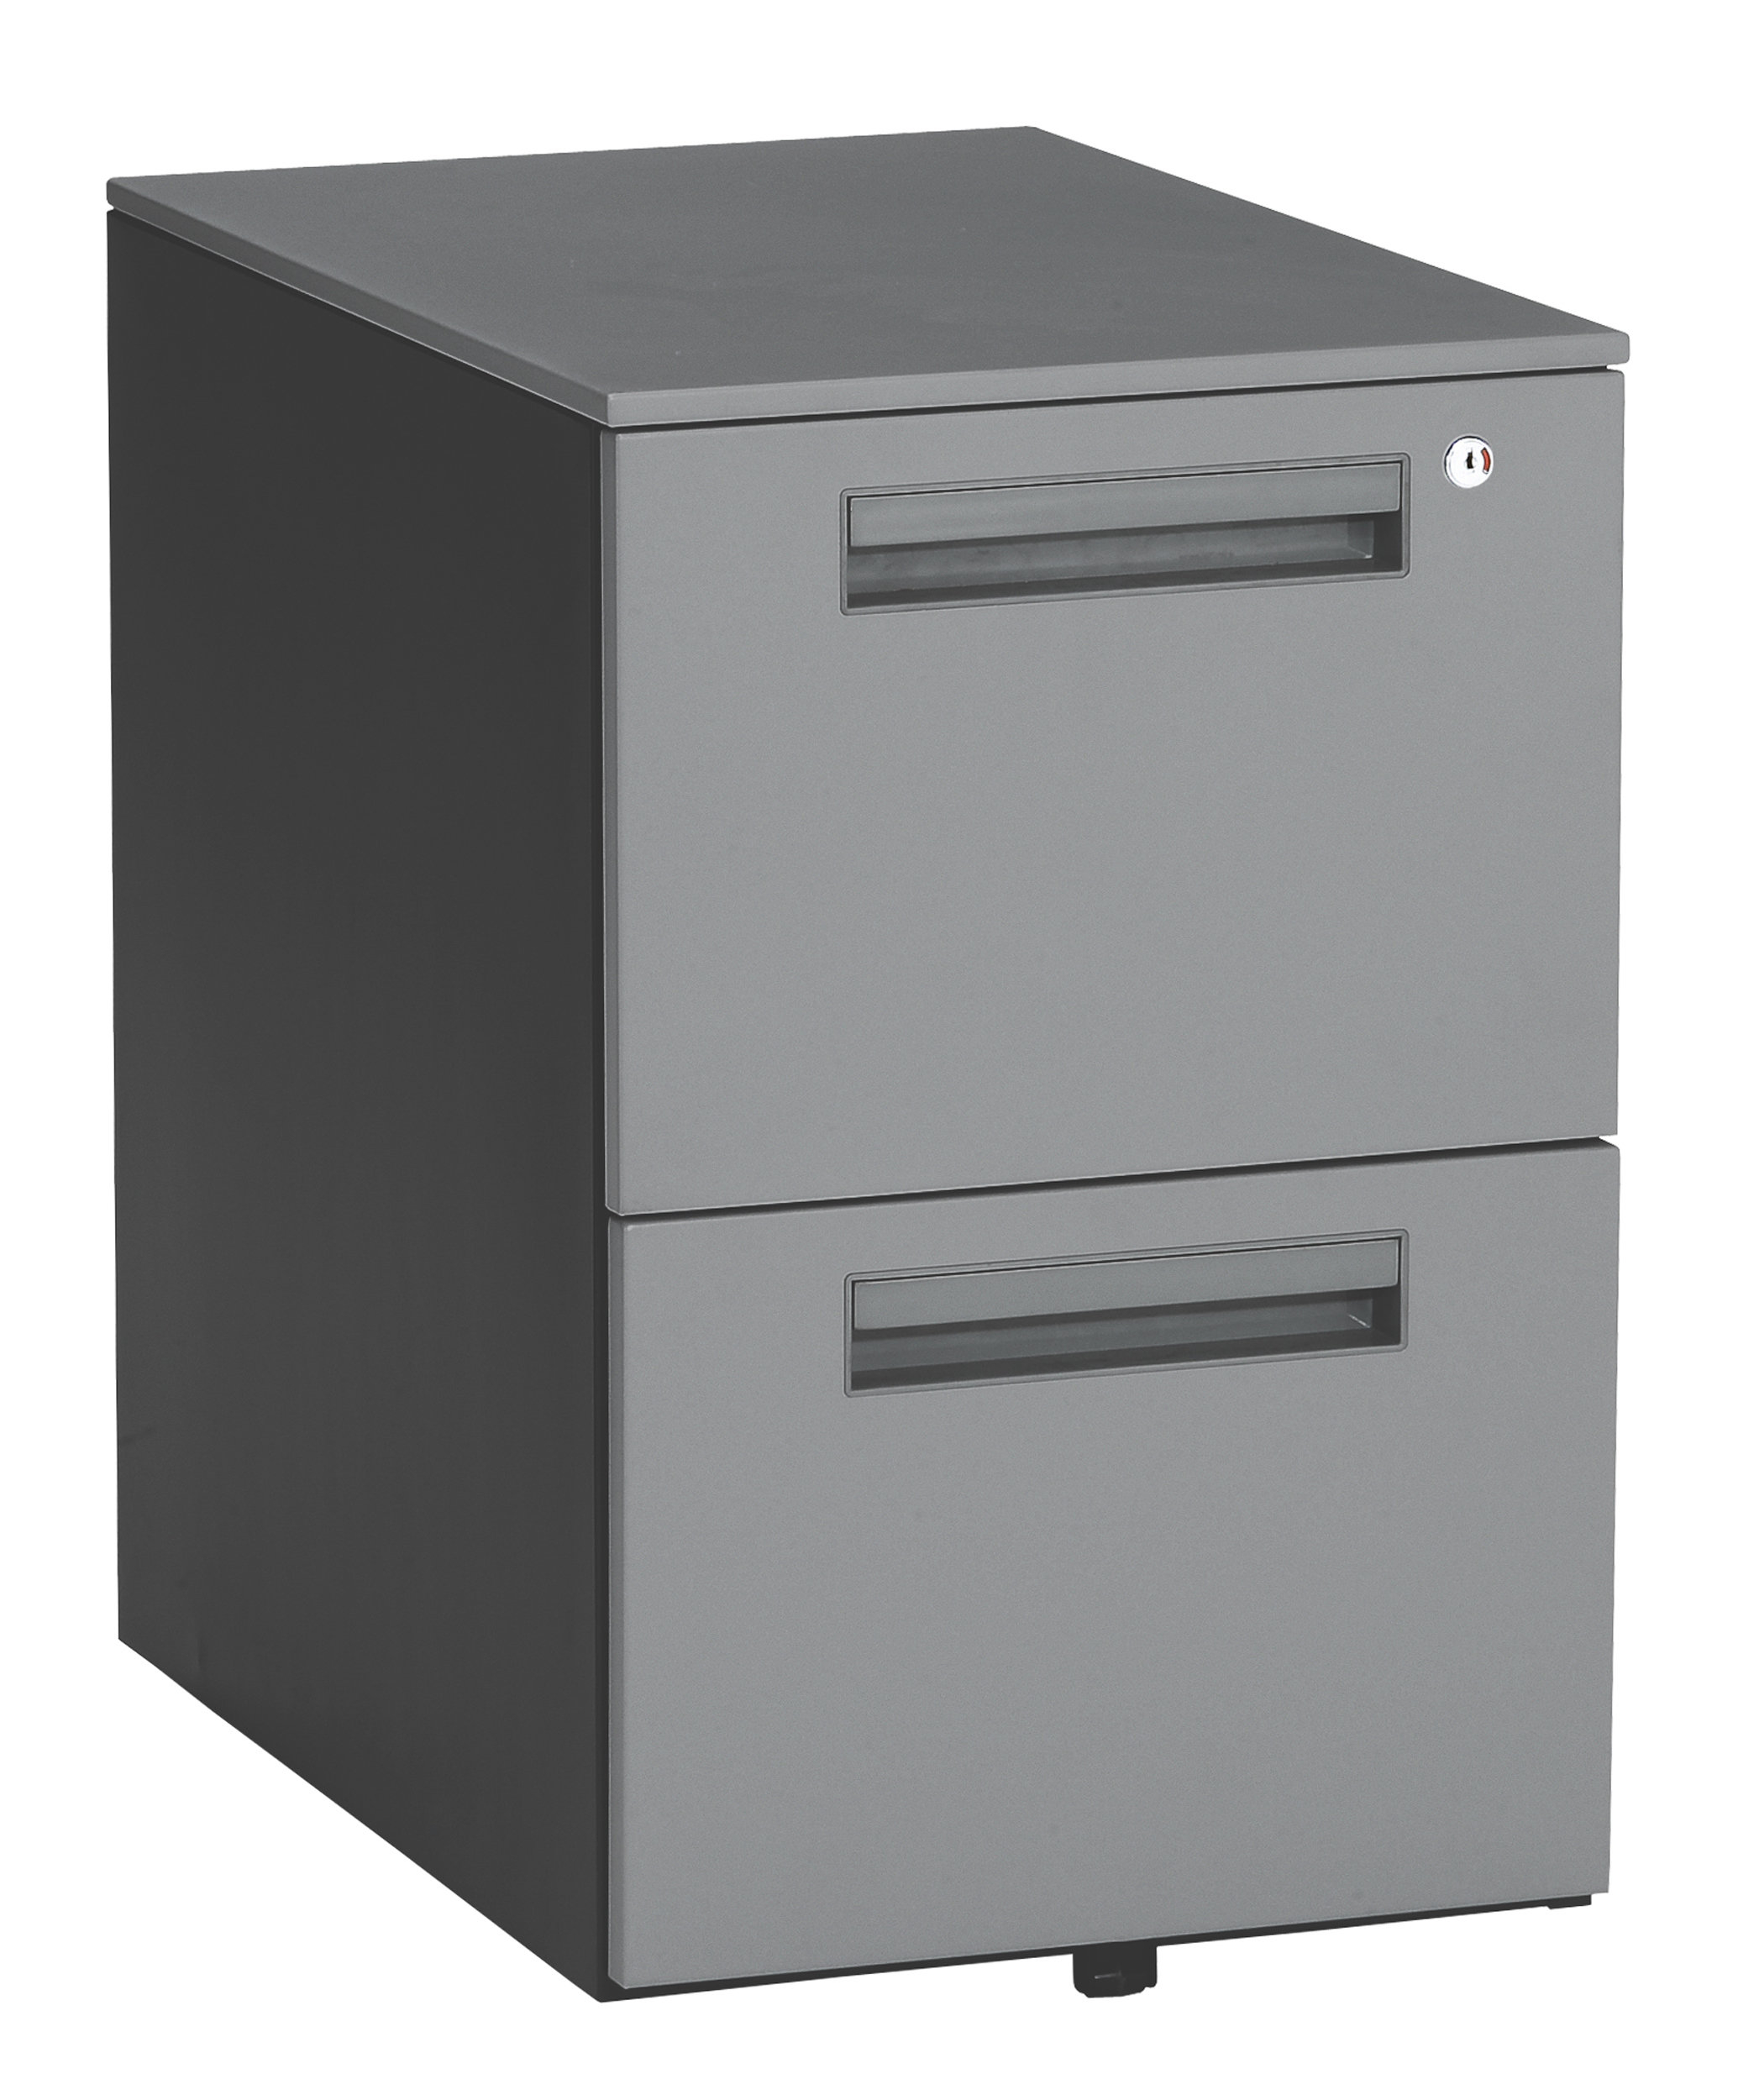 Ofm Executive Series 2 Drawer Mobile Vertical Filing Cabinet regarding measurements 2069 X 2500